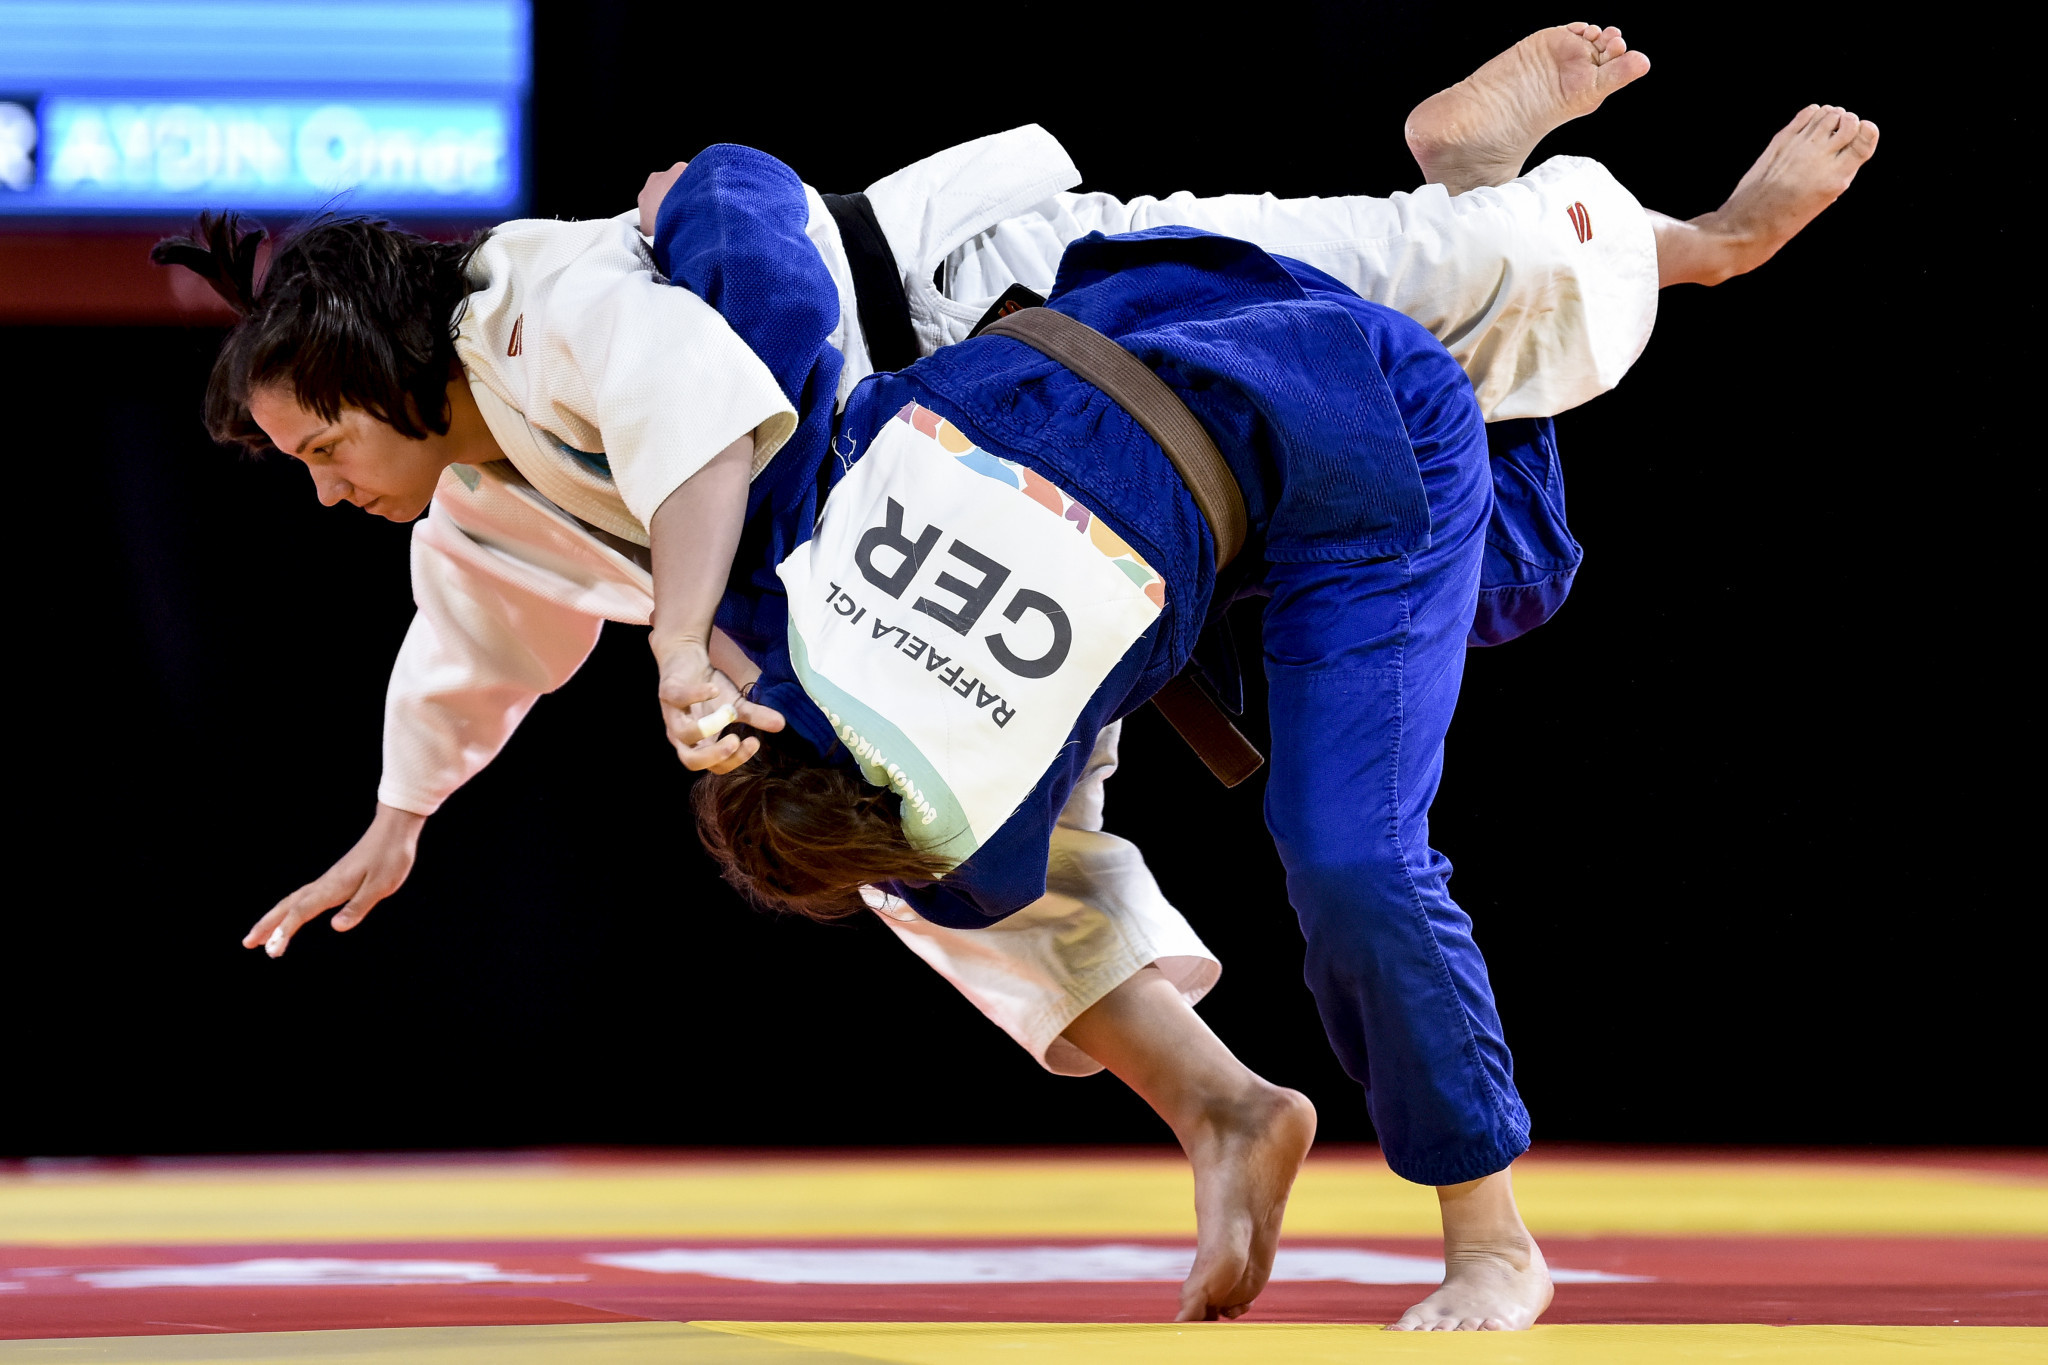 Germany university online tournament backed by German Judo Association